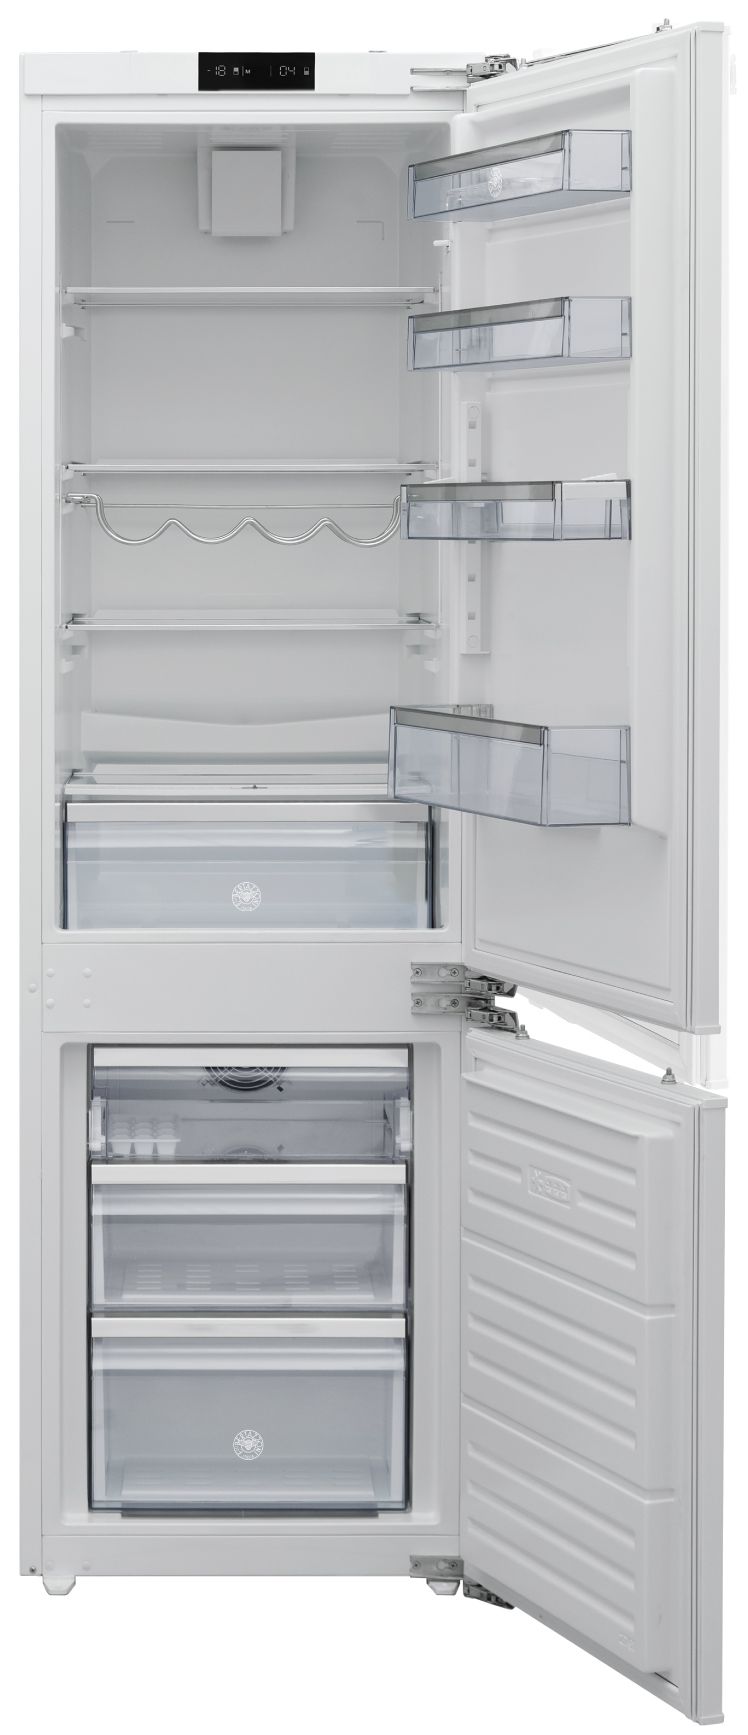 фото Встраиваемый холодильник bertazzoni ref603bbnpvc/20 белый